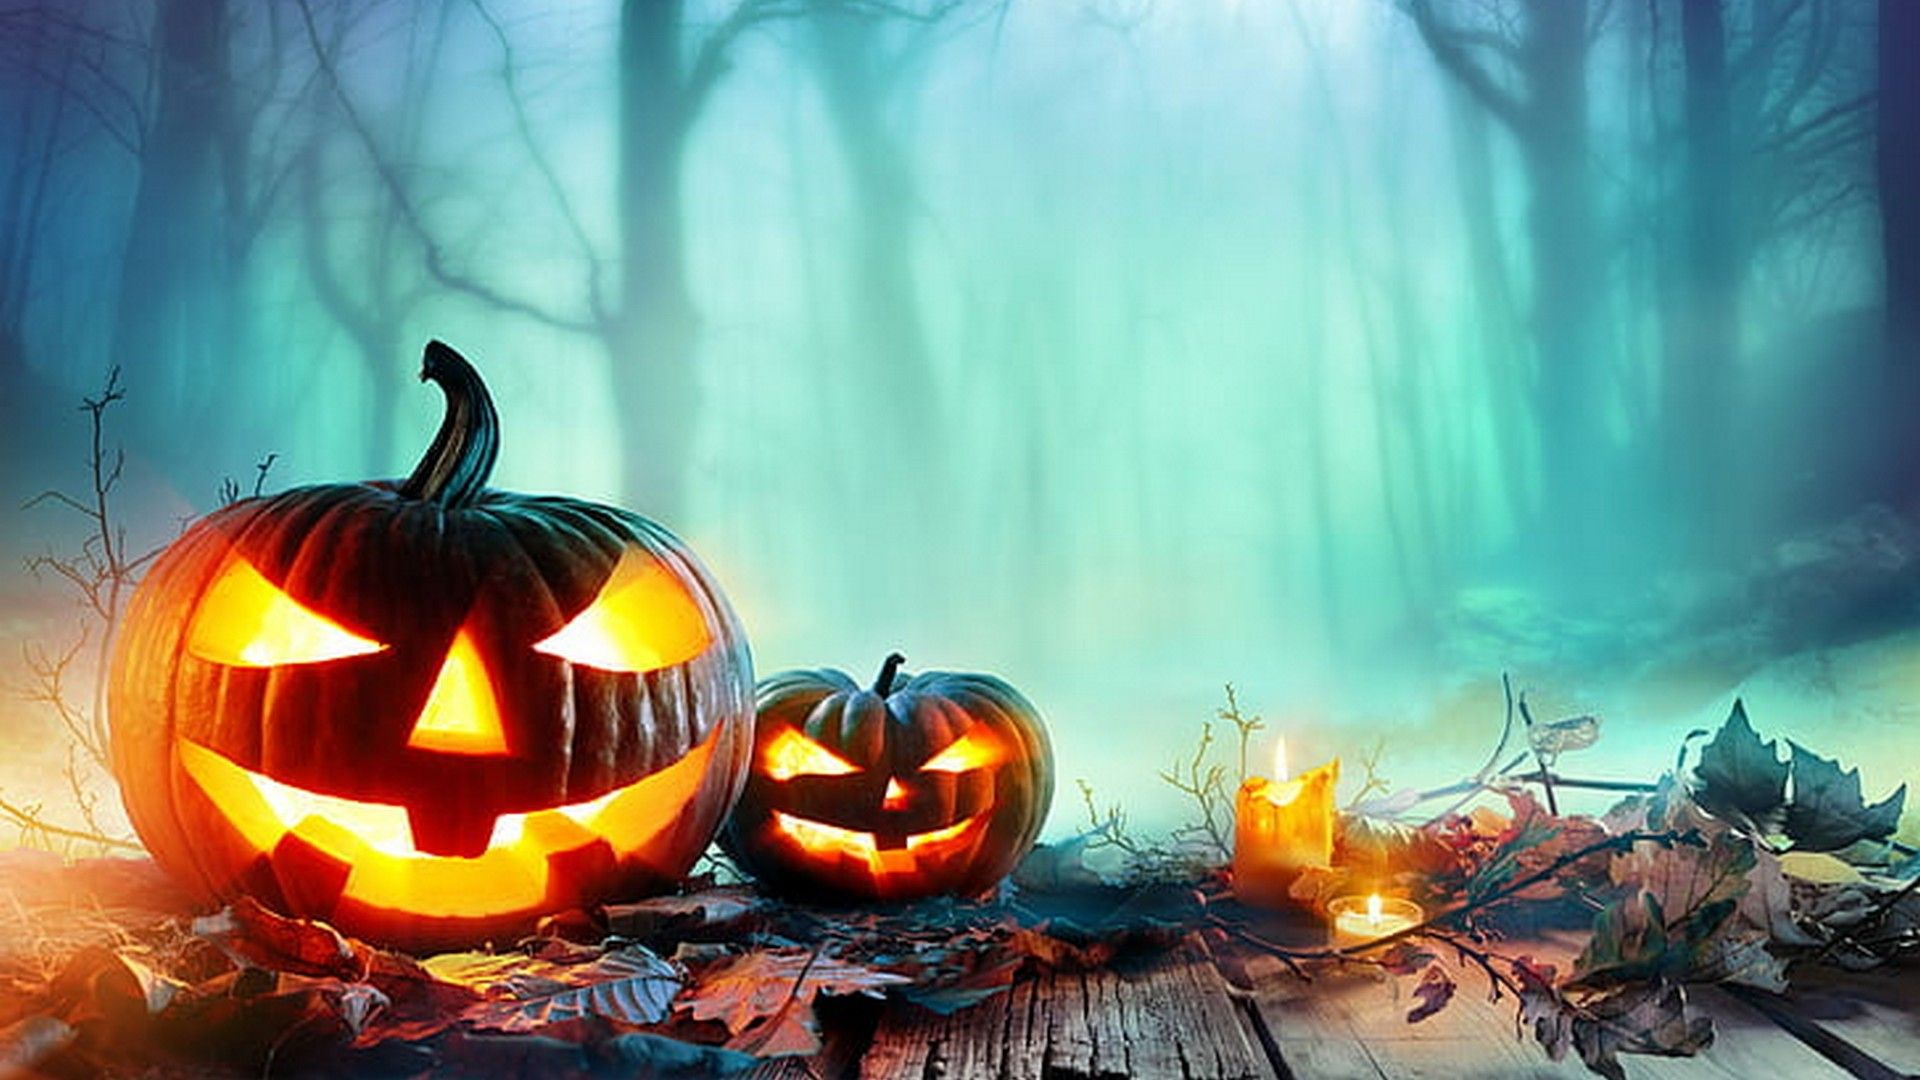 Halloween Aesthetic Background Wallpaper HD Live Wallpaper HD. Pumpkin wallpaper, Halloween background, Halloween image